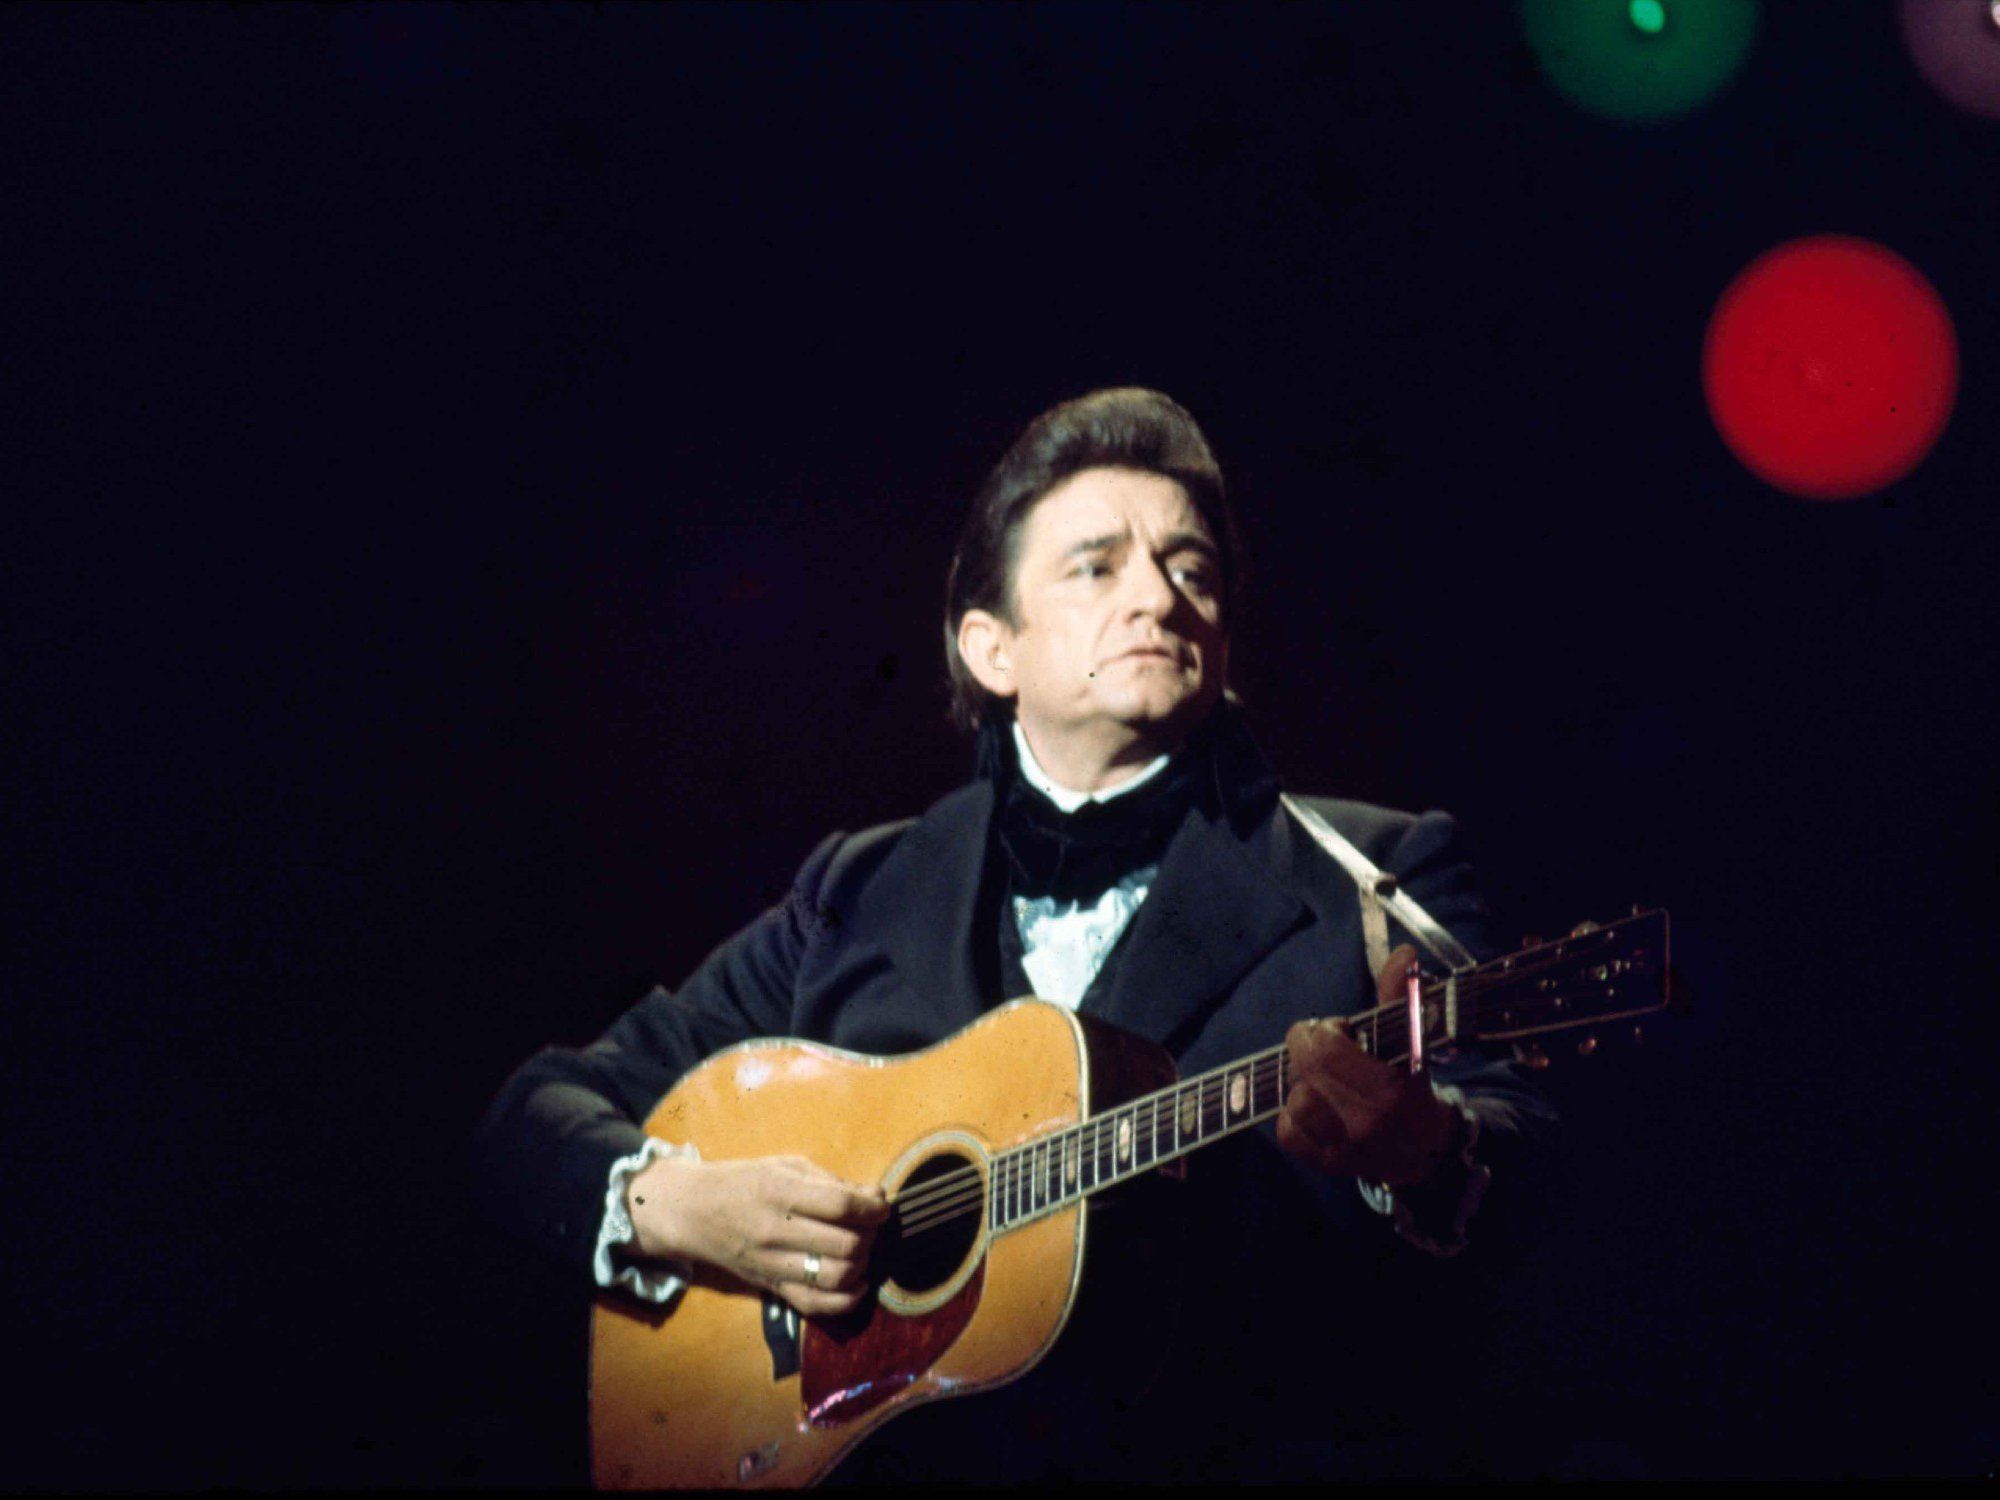 Innovative Johnny Cash show headlines 202324 Bass Hall concert series